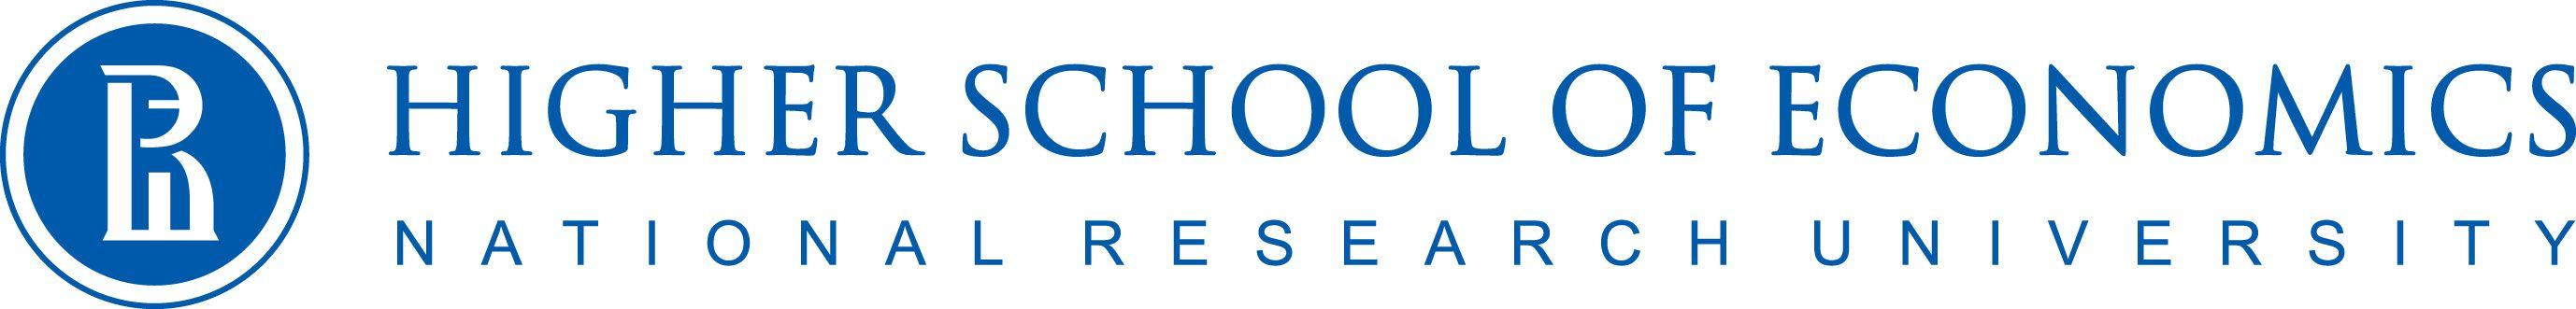 HSE Logo - Brandbook – About HSE University – Higher School of Economics ...